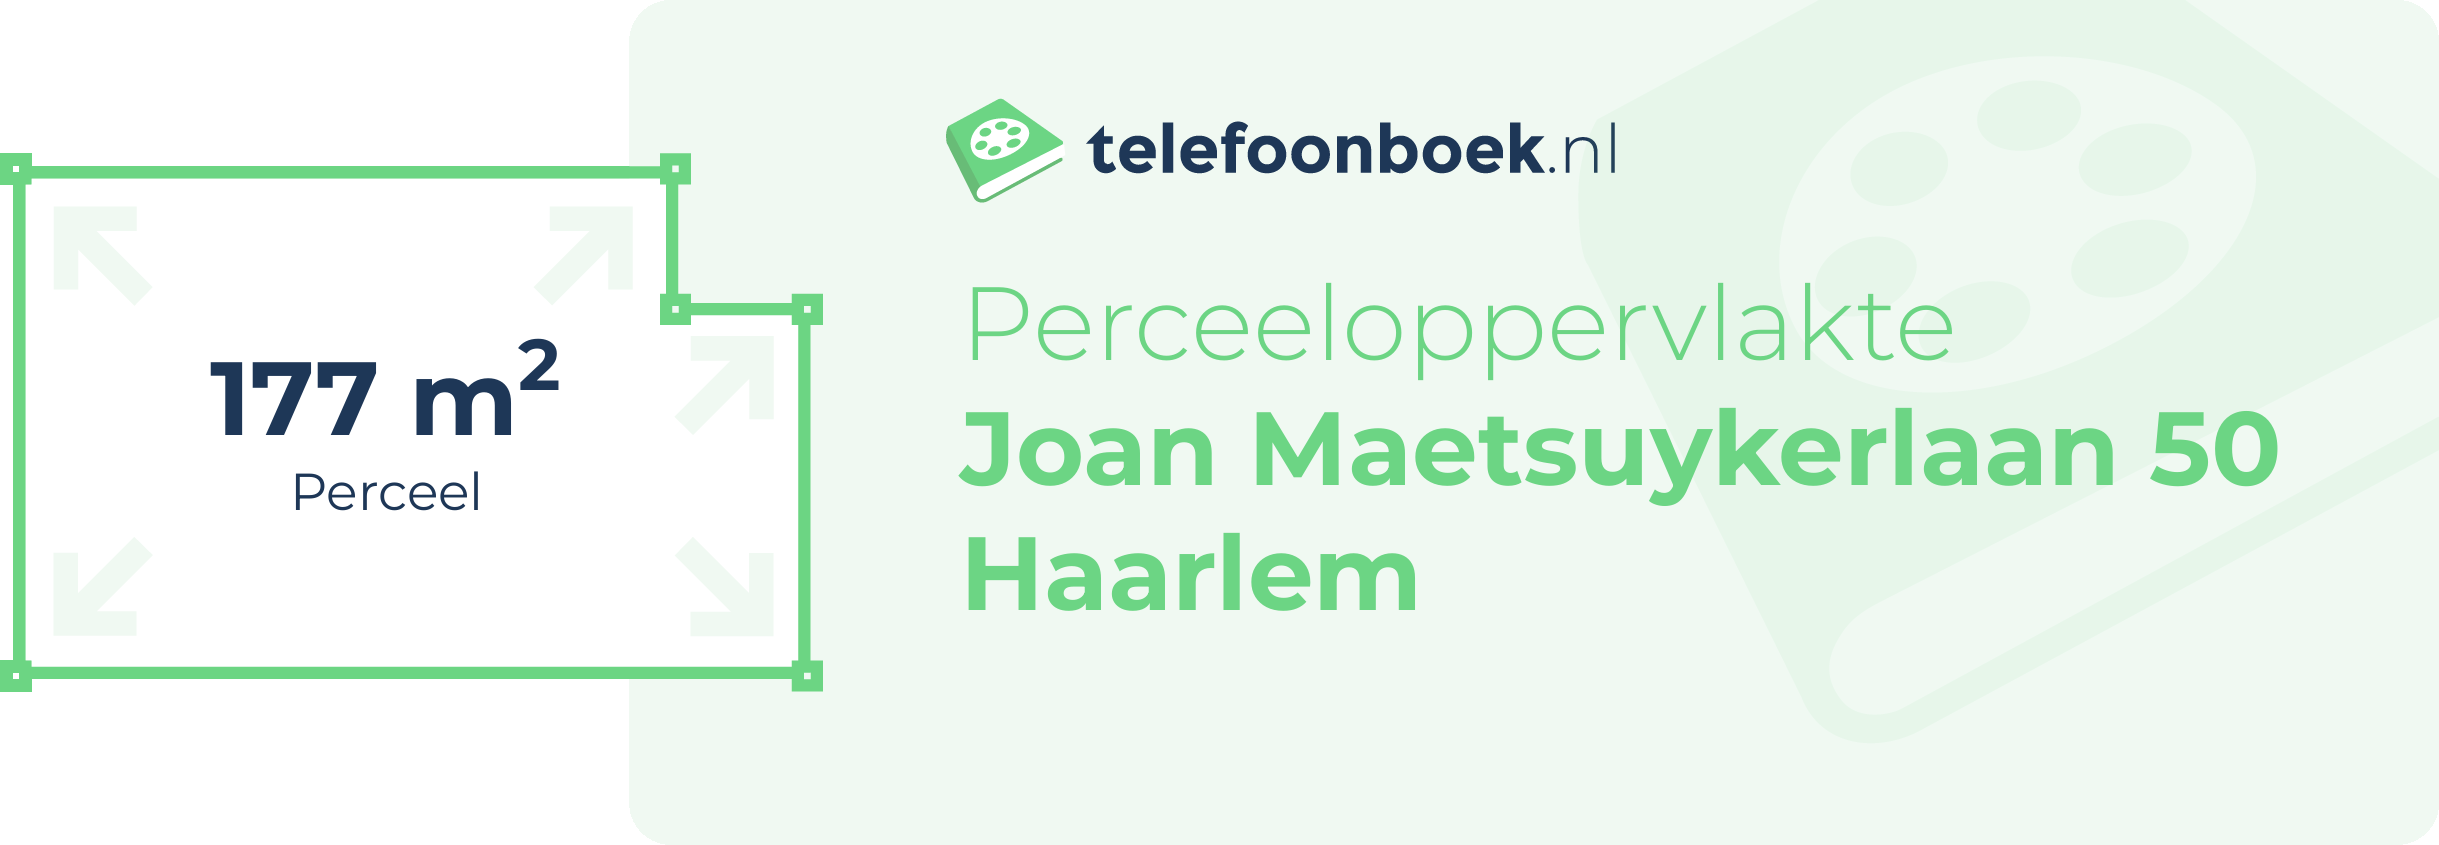 Perceeloppervlakte Joan Maetsuykerlaan 50 Haarlem